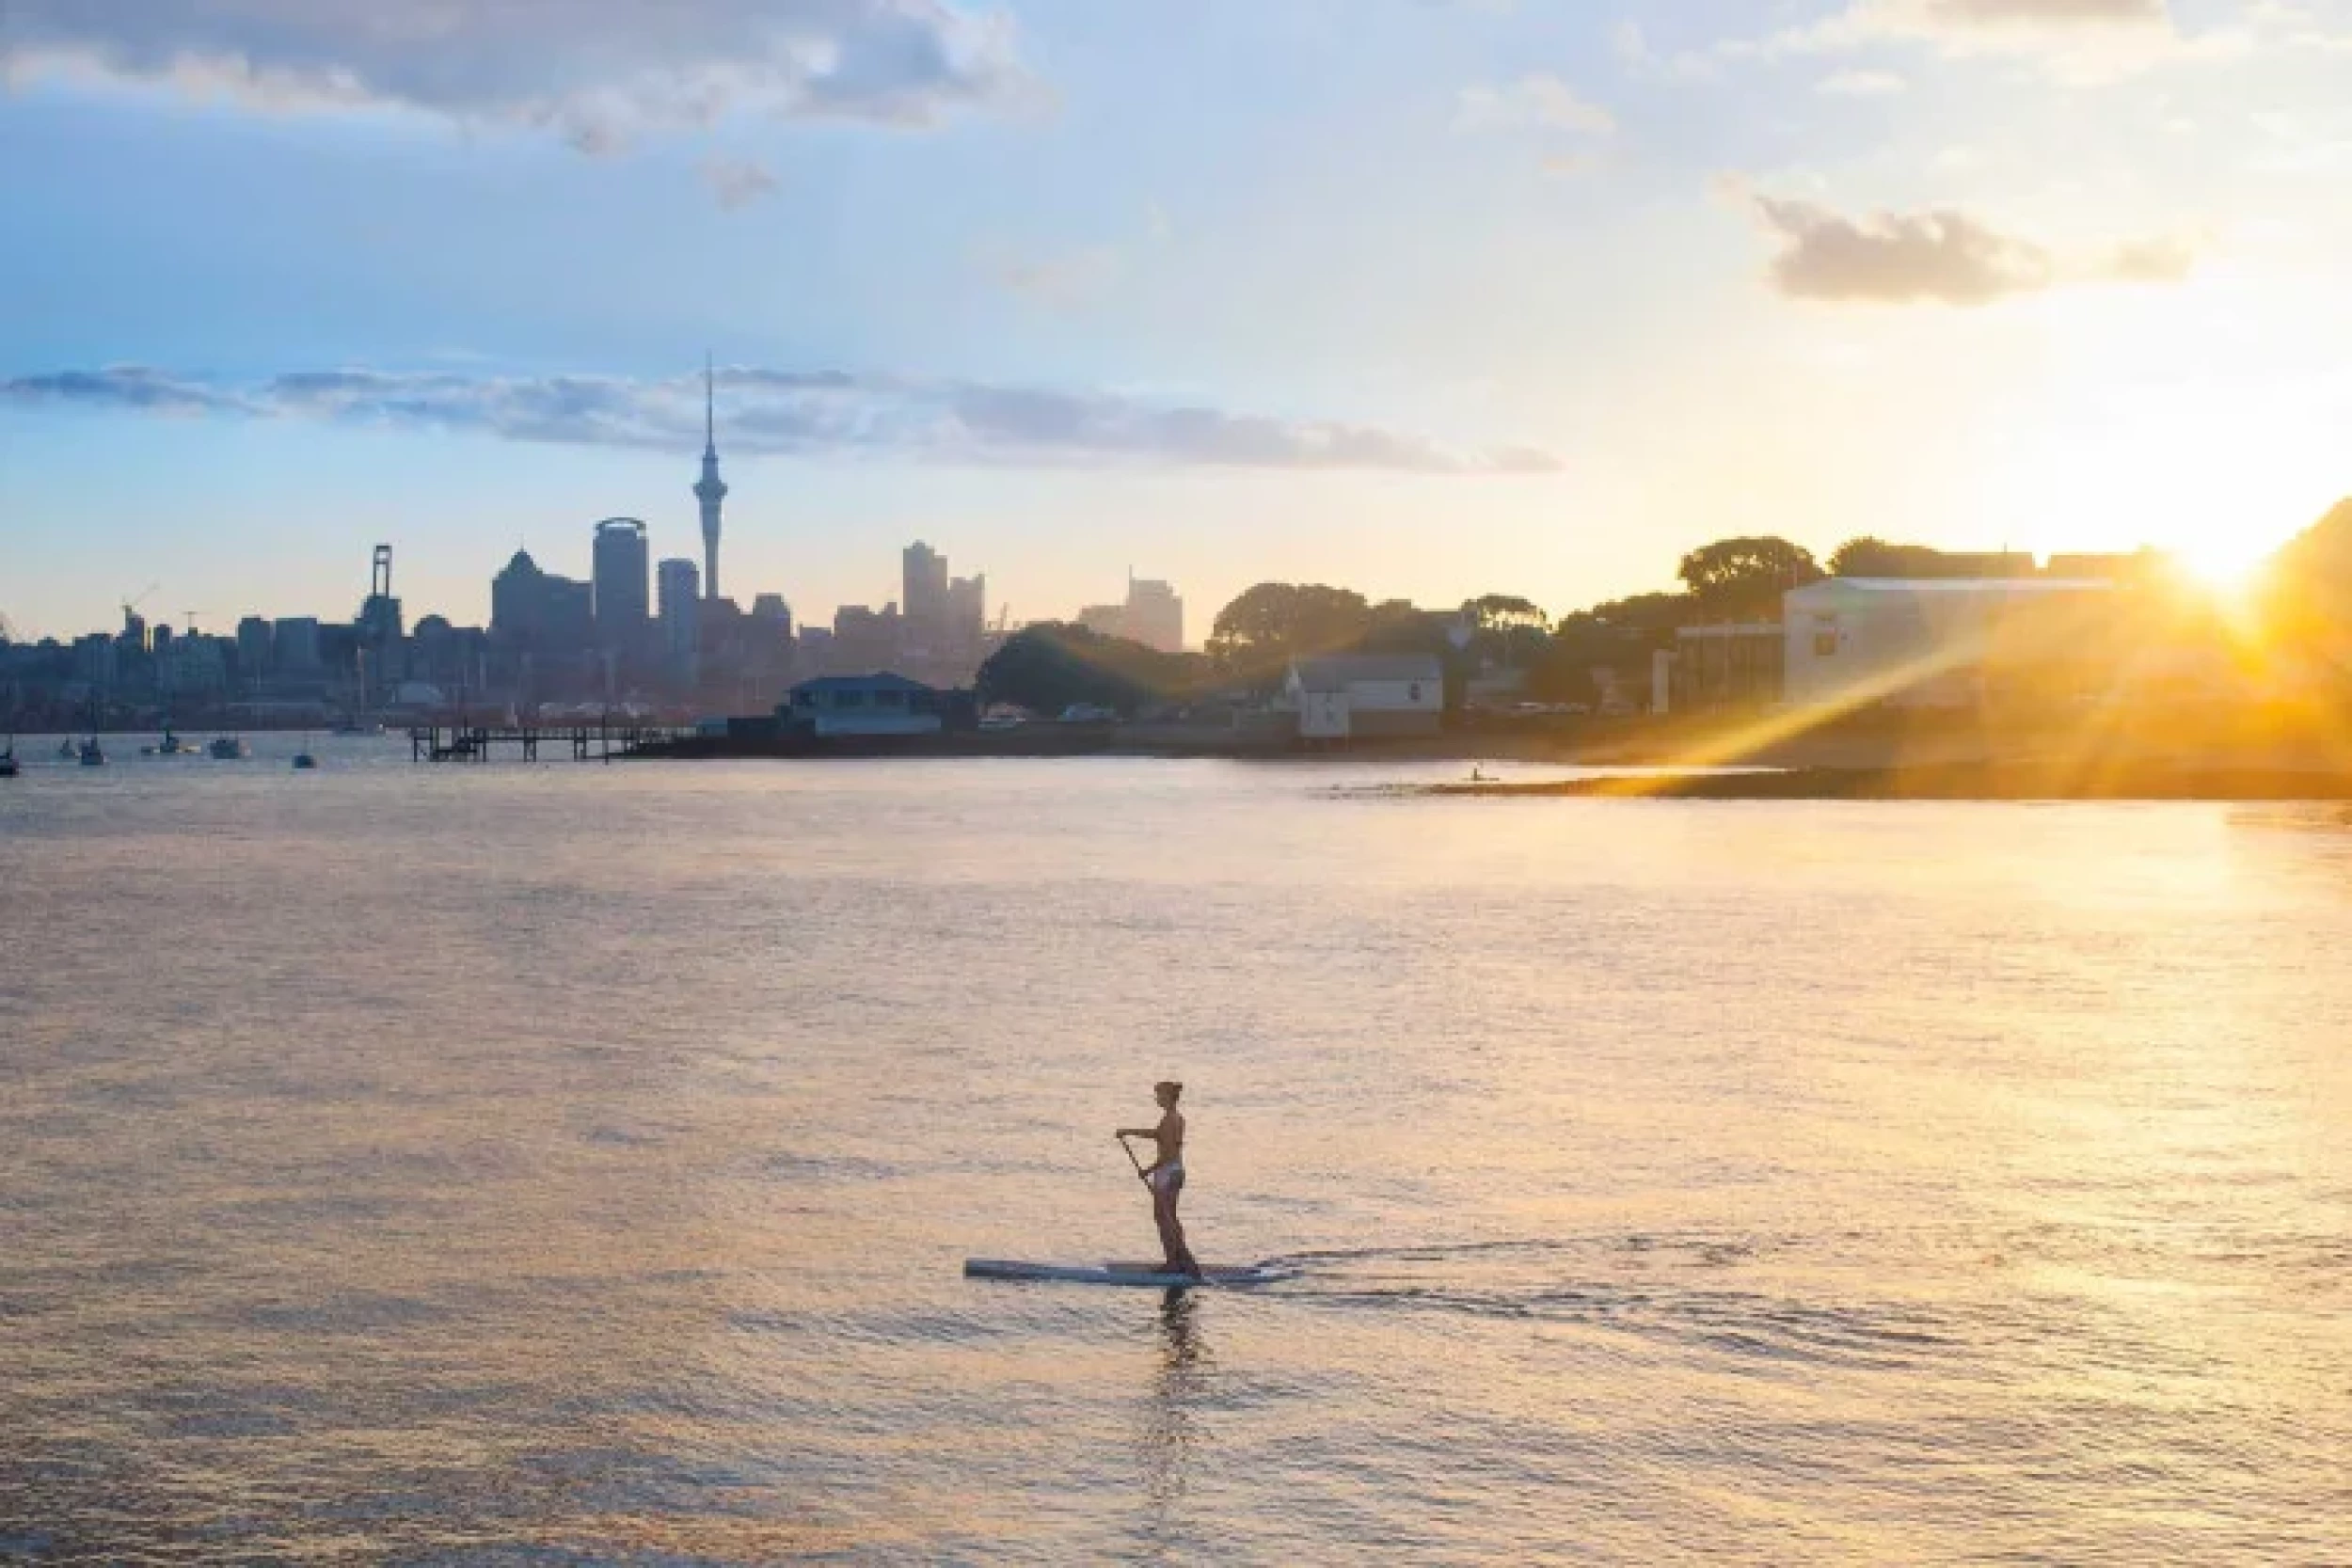 Standup paddler in the Auckland harbour - Credit: Matt Crawford